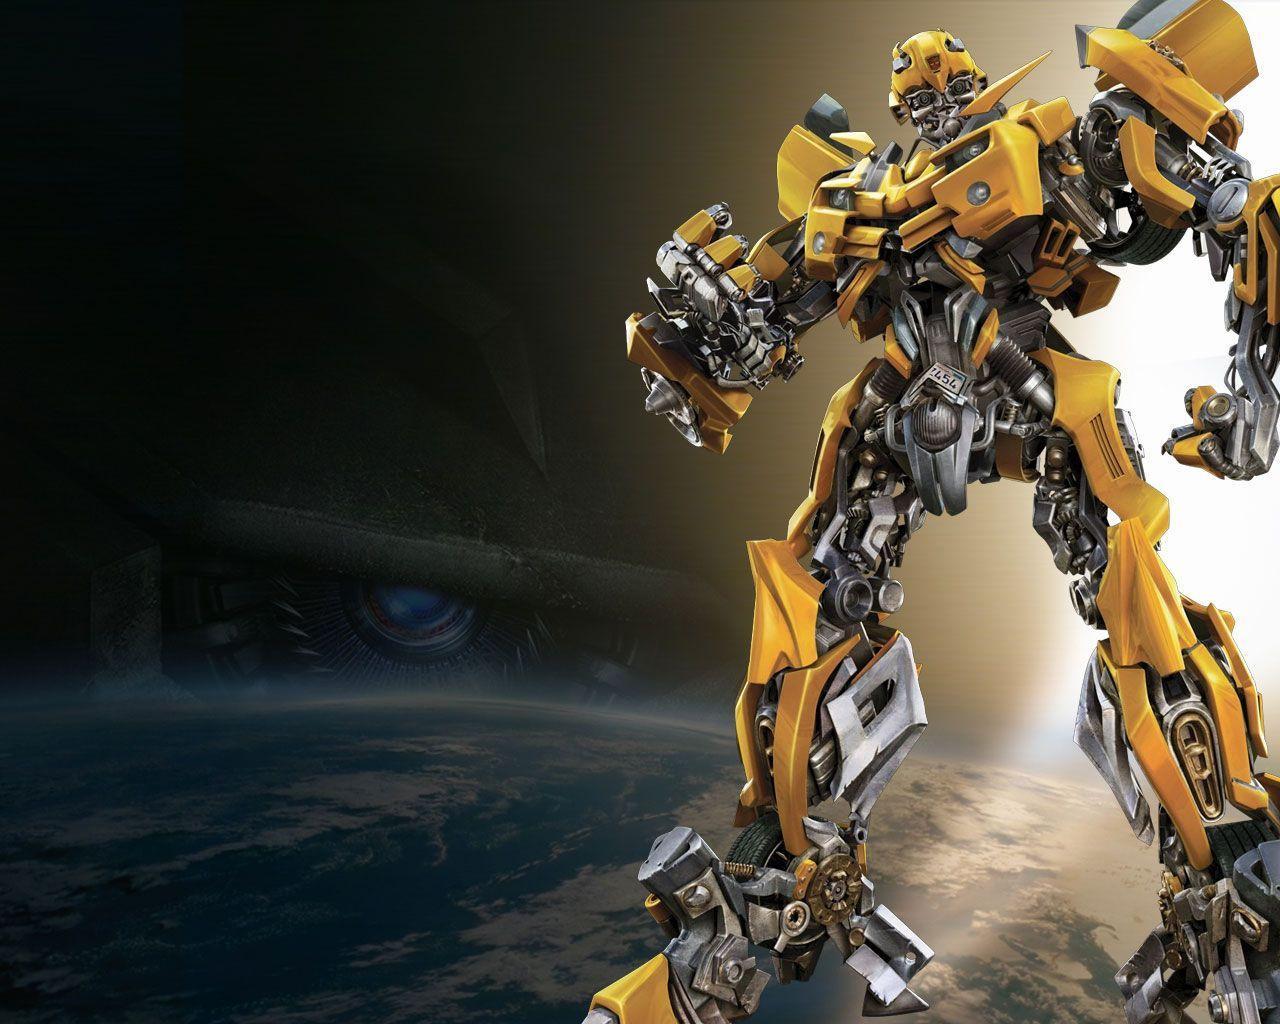 image For > Transformer Bumblebee Wallpaper